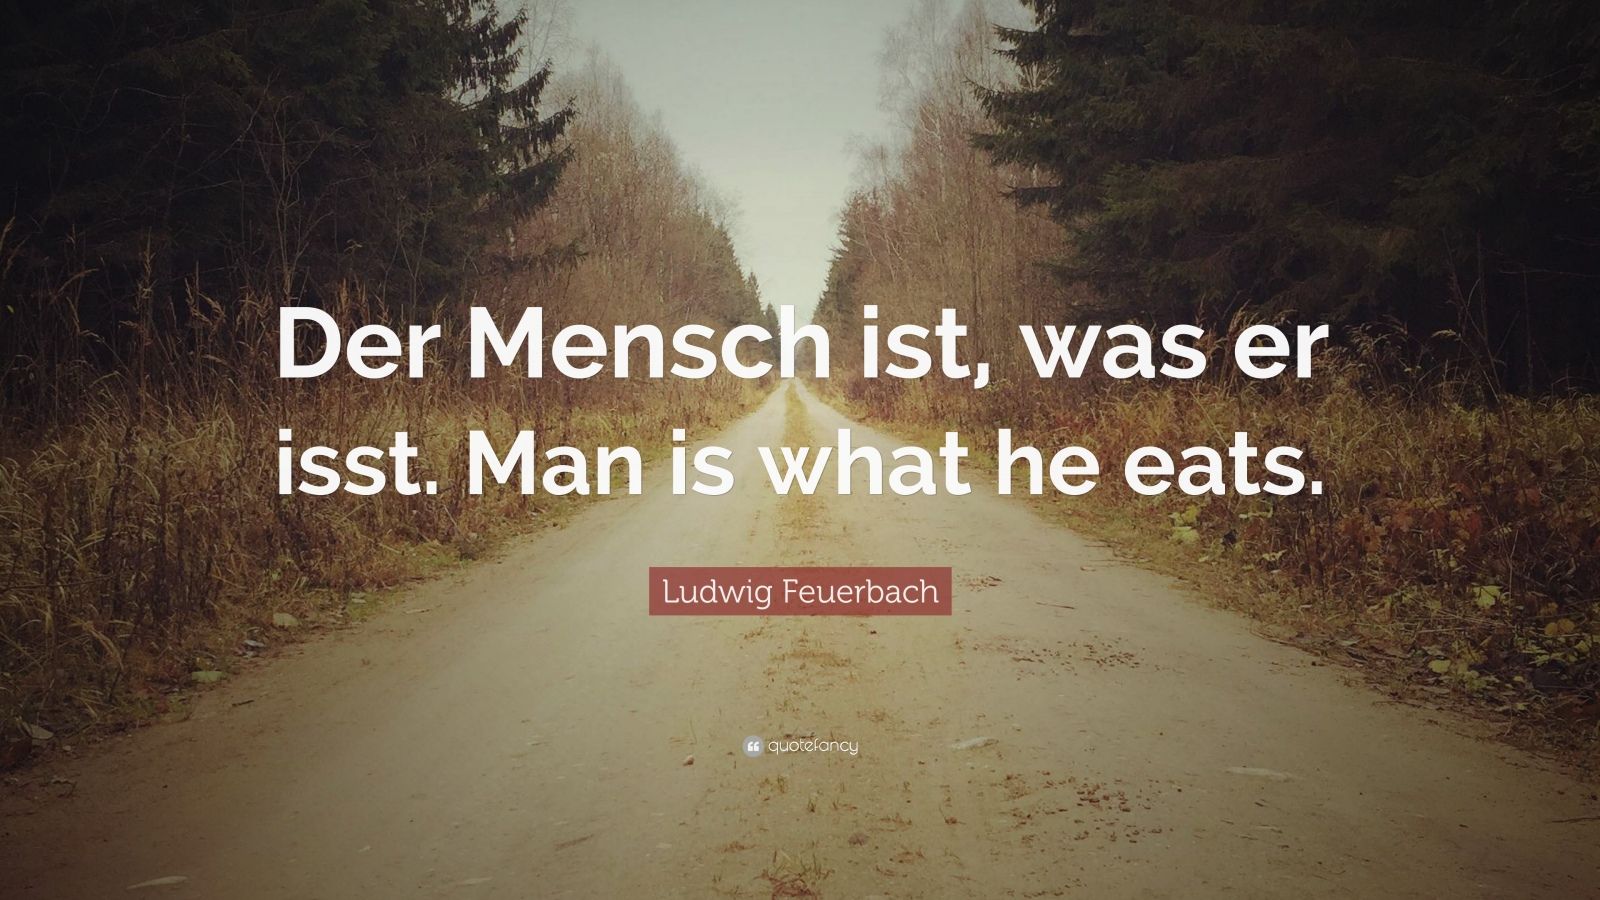 Feuerbach quotes